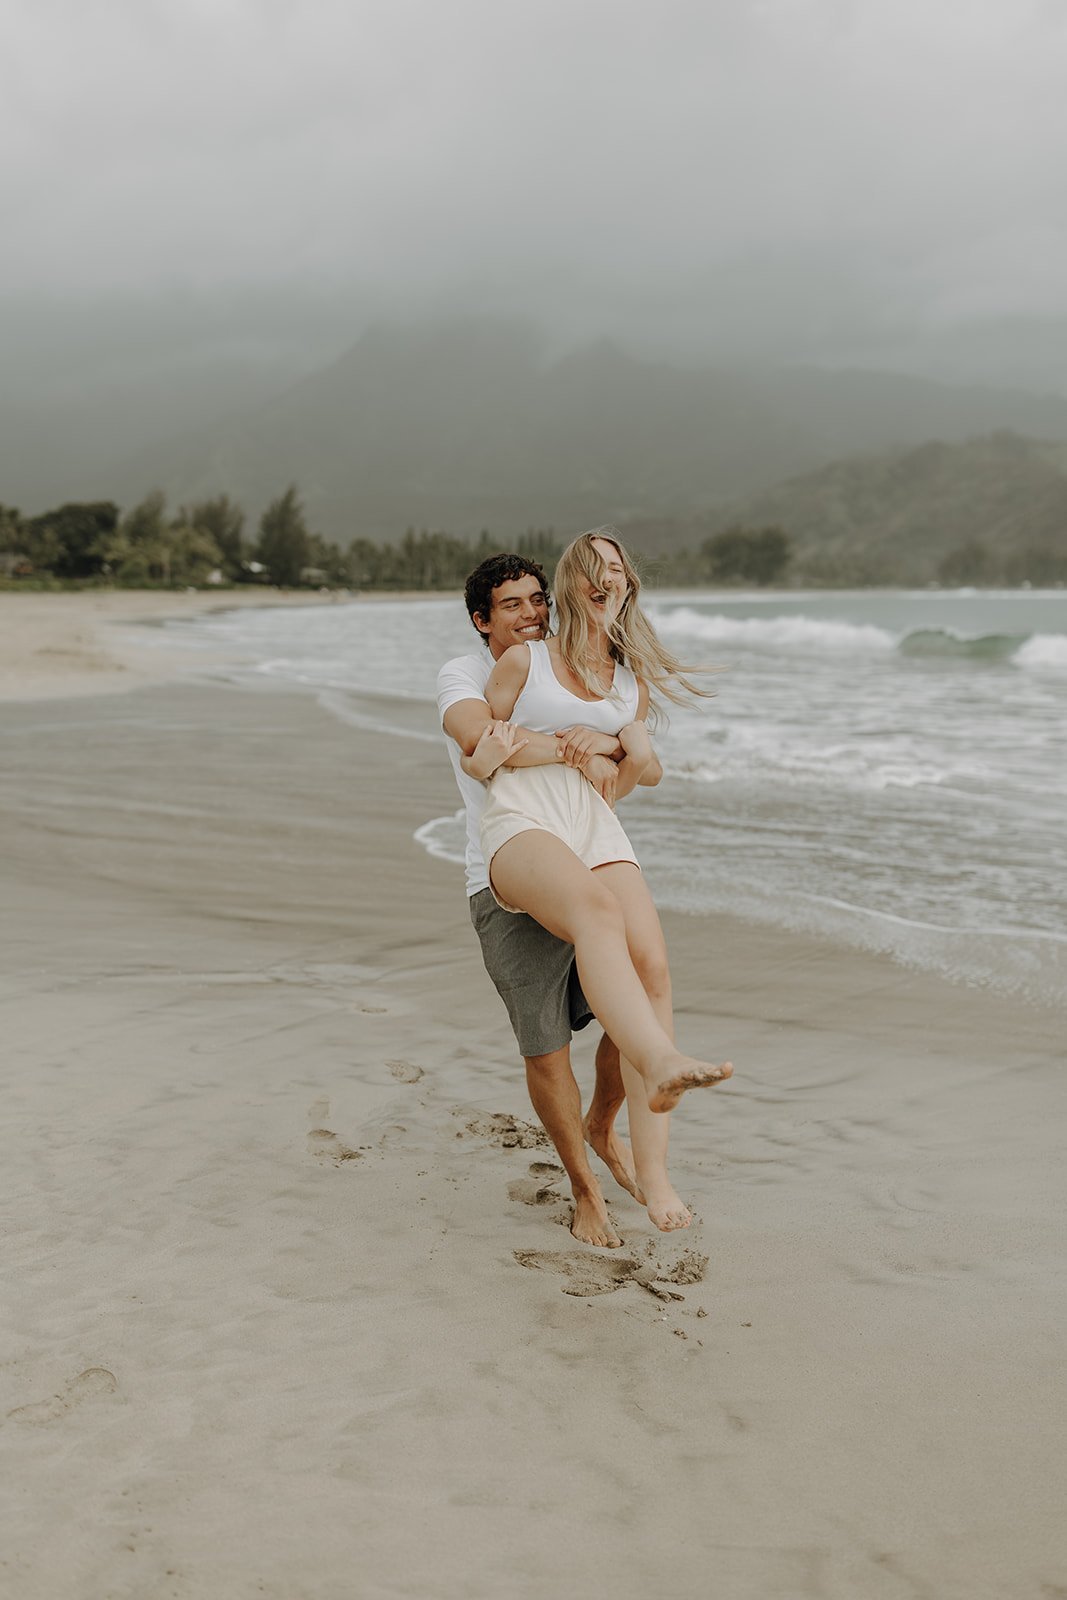 Man swinging woman around on the beach in Kauai for Hawaii engagement photos